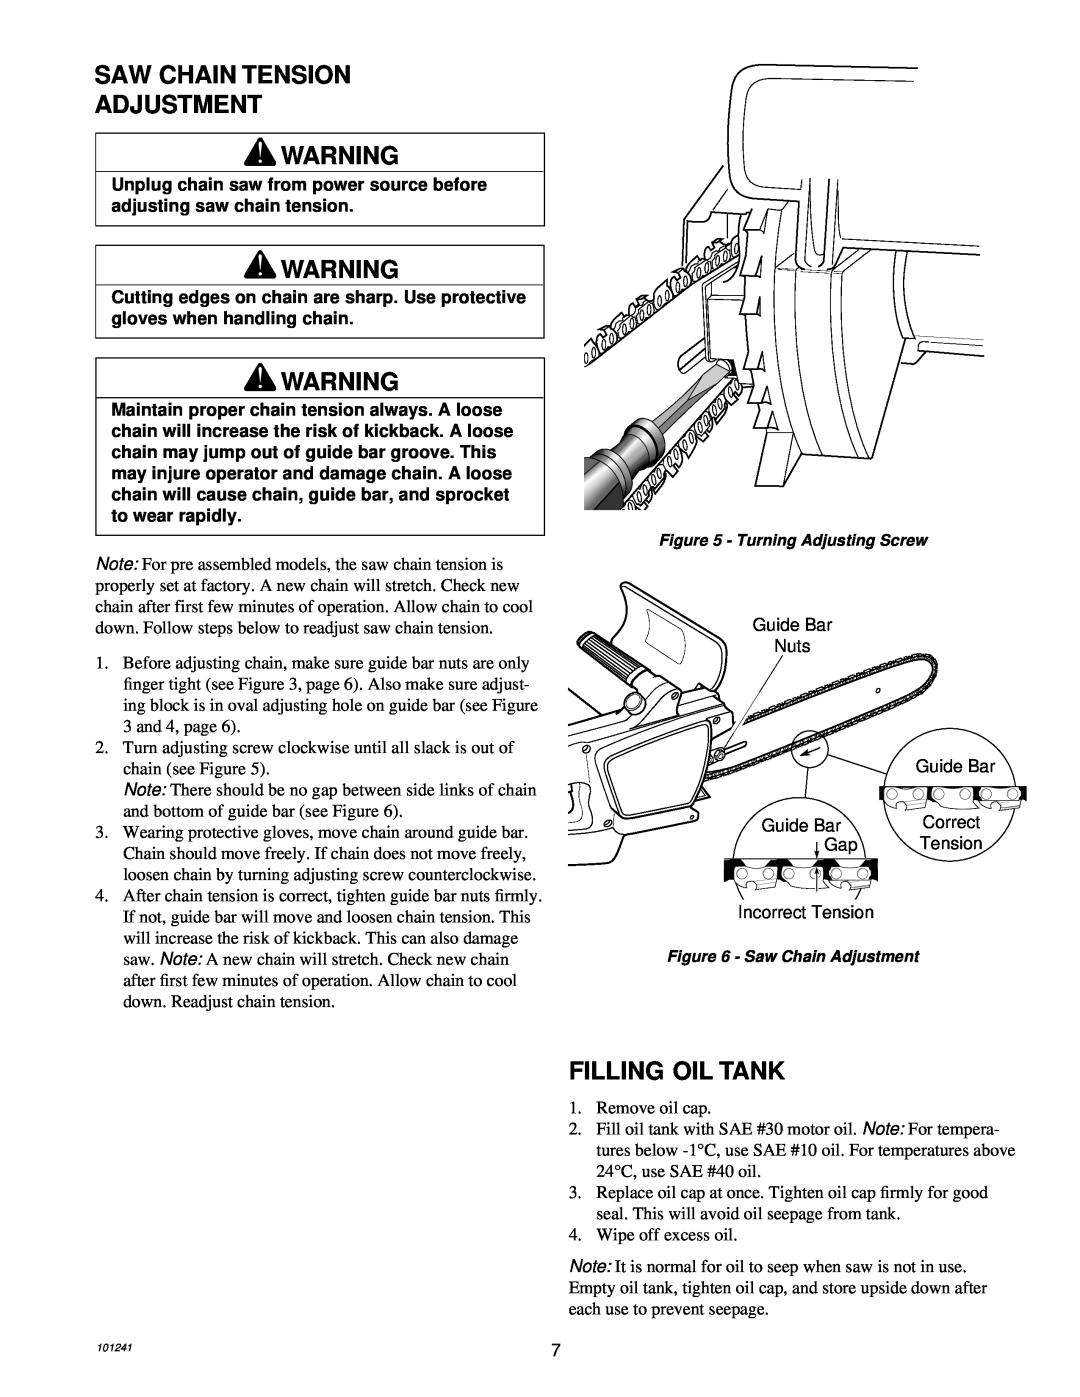 Remington 100582-01, 100582-02, EL-7B owner manual Saw Chain Tension Adjustment, Filling Oil Tank 